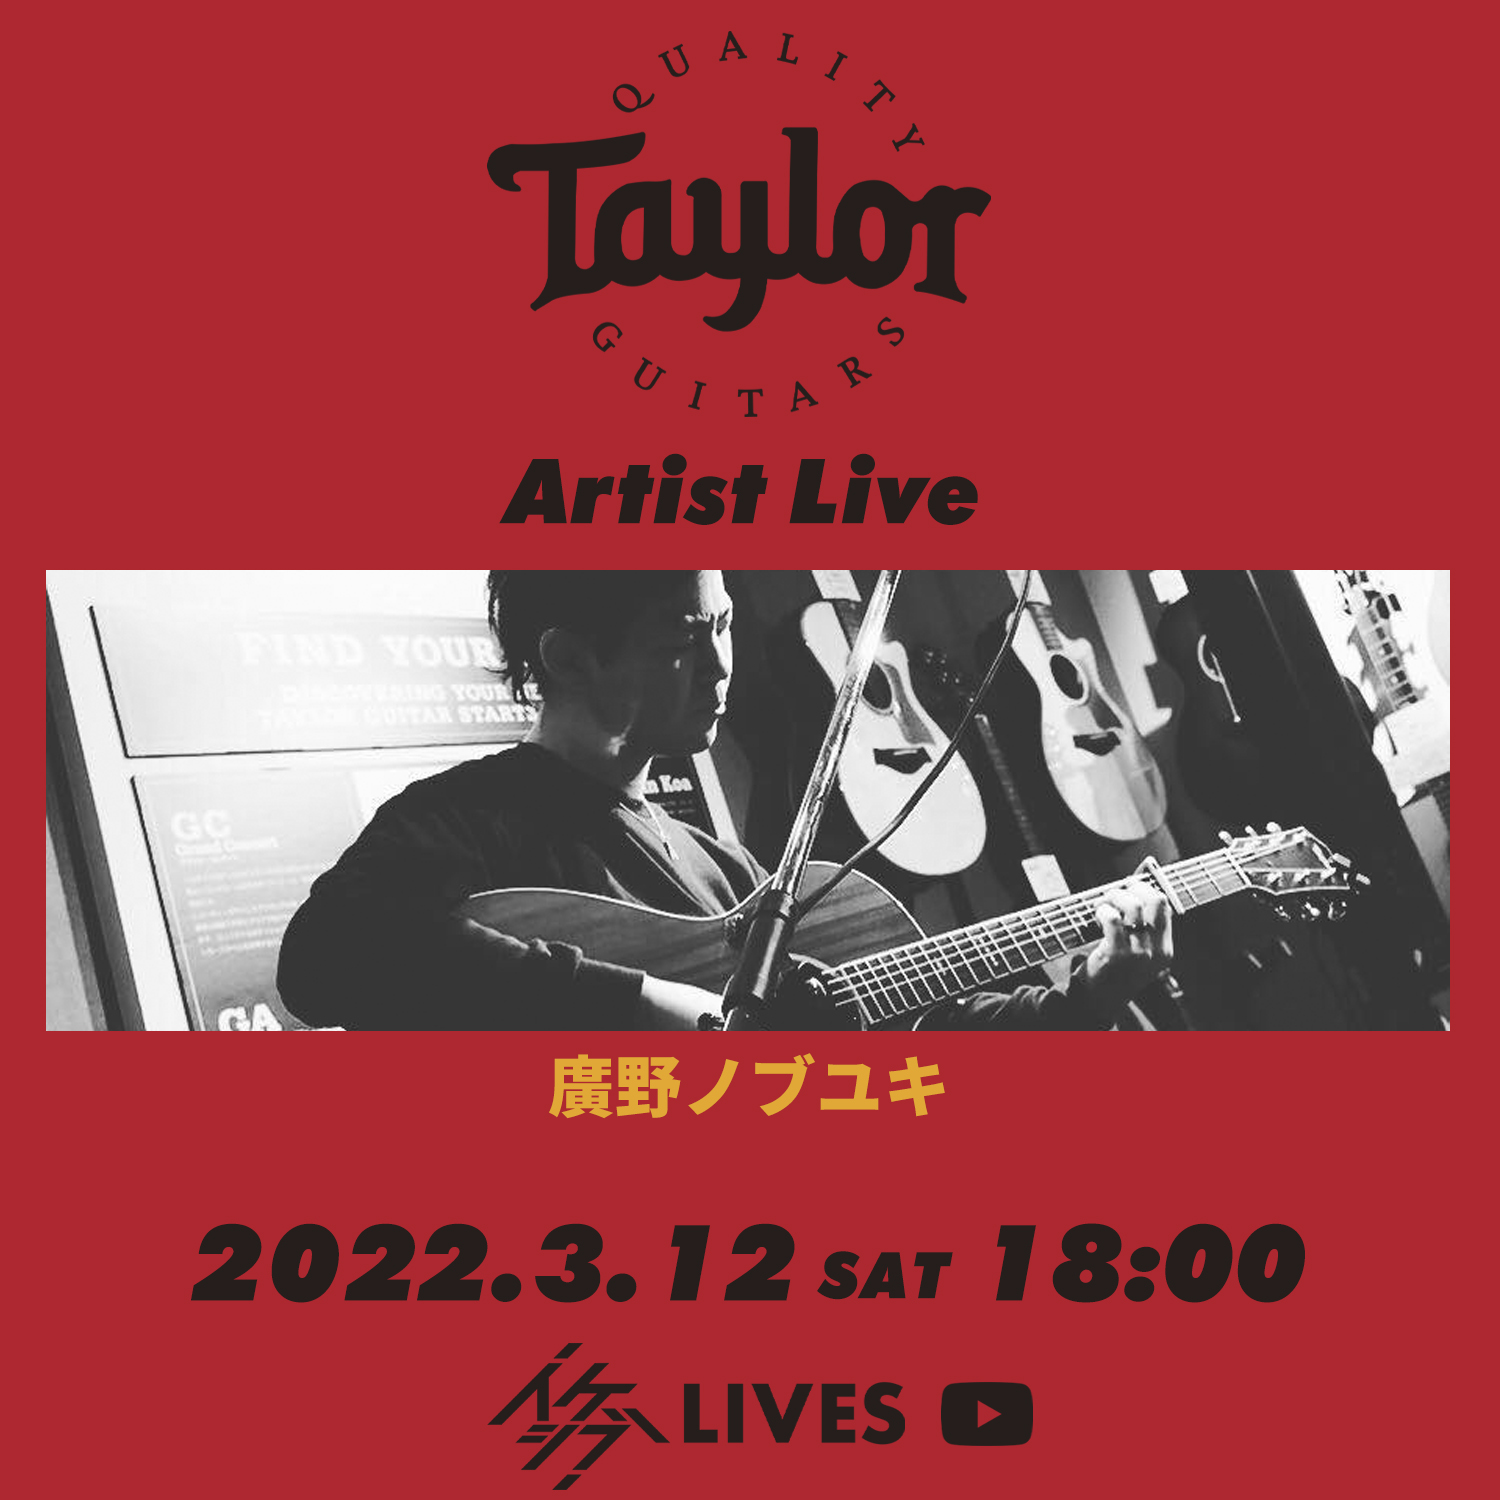 Taylor Guitars Artist Live #8 